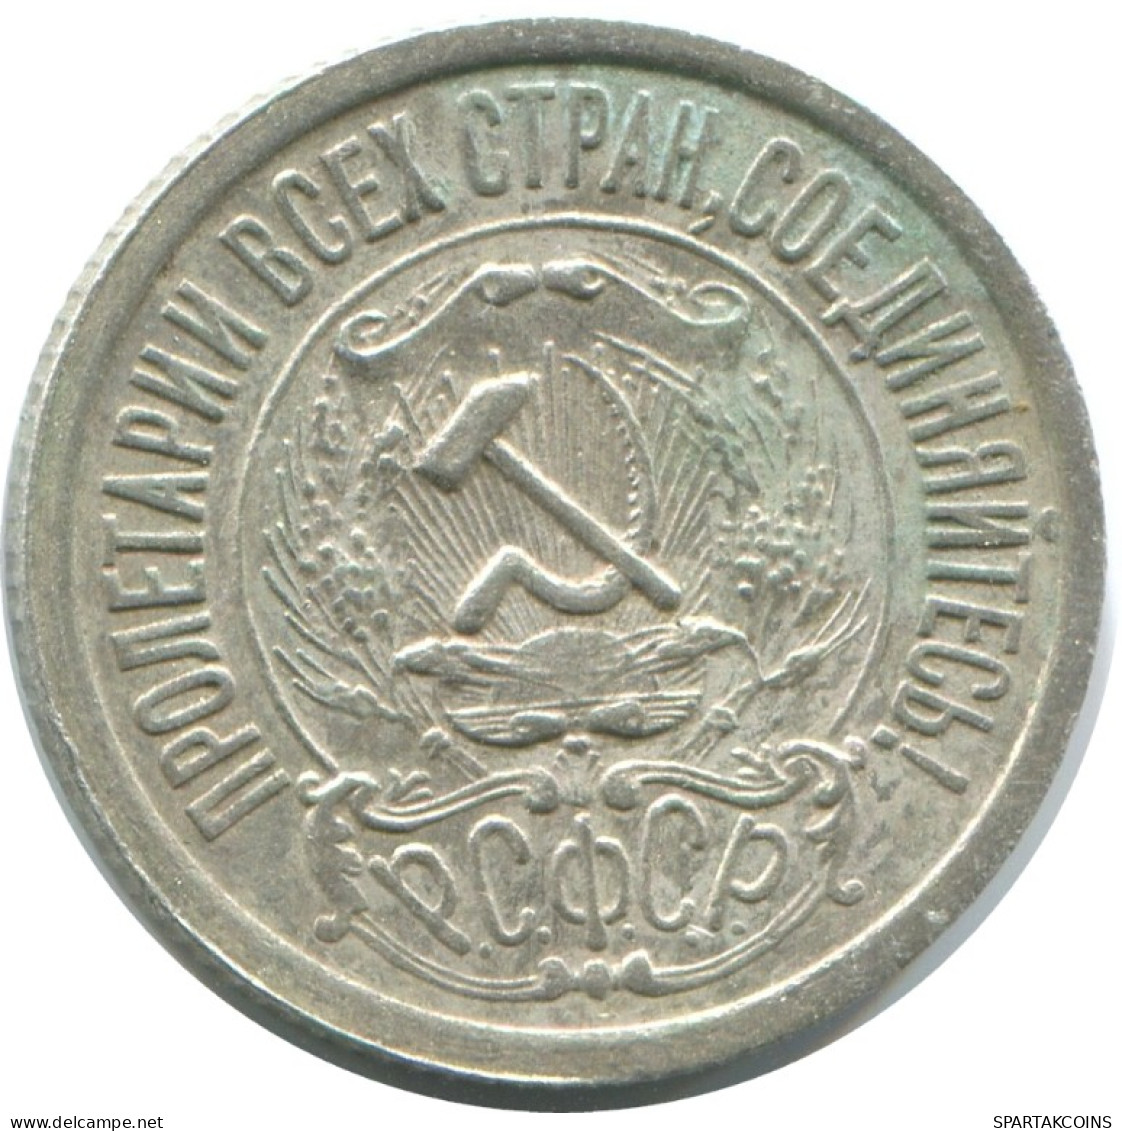 15 KOPEKS 1922 RUSSIA RSFSR SILVER Coin HIGH GRADE #AF216.4.U.A - Russia